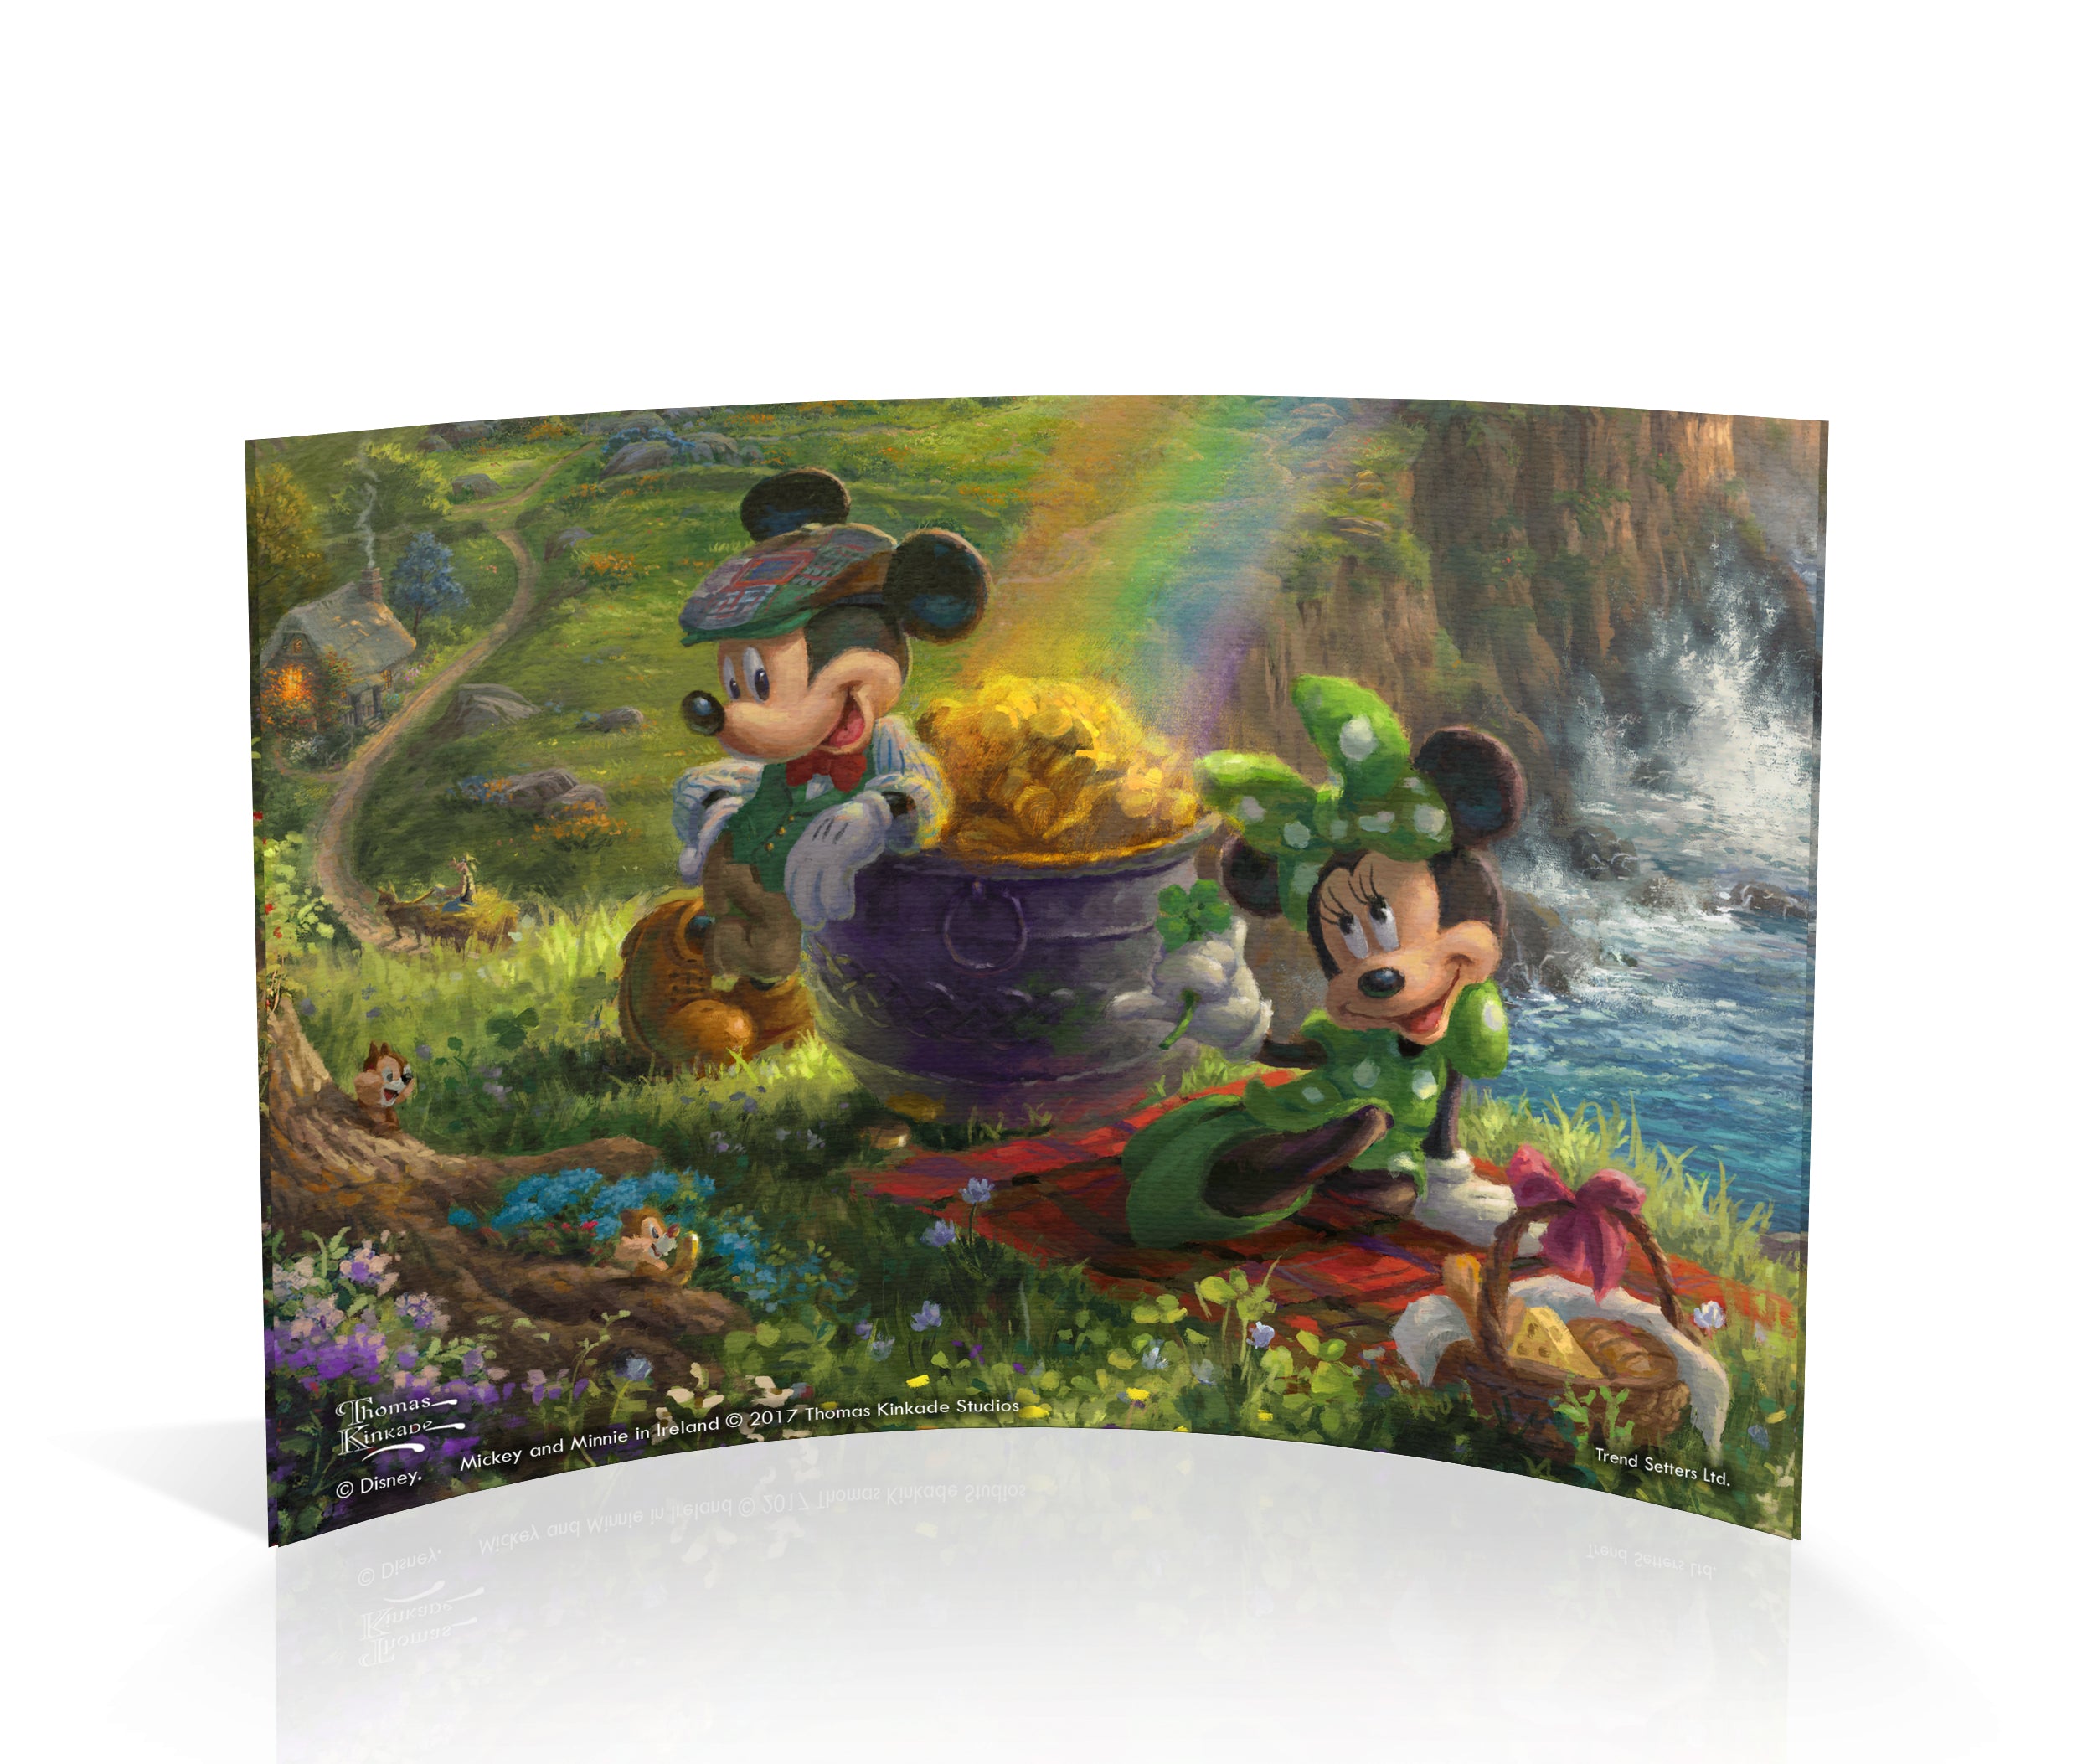 Disney (Mickey and Minnie in Ireland) 7